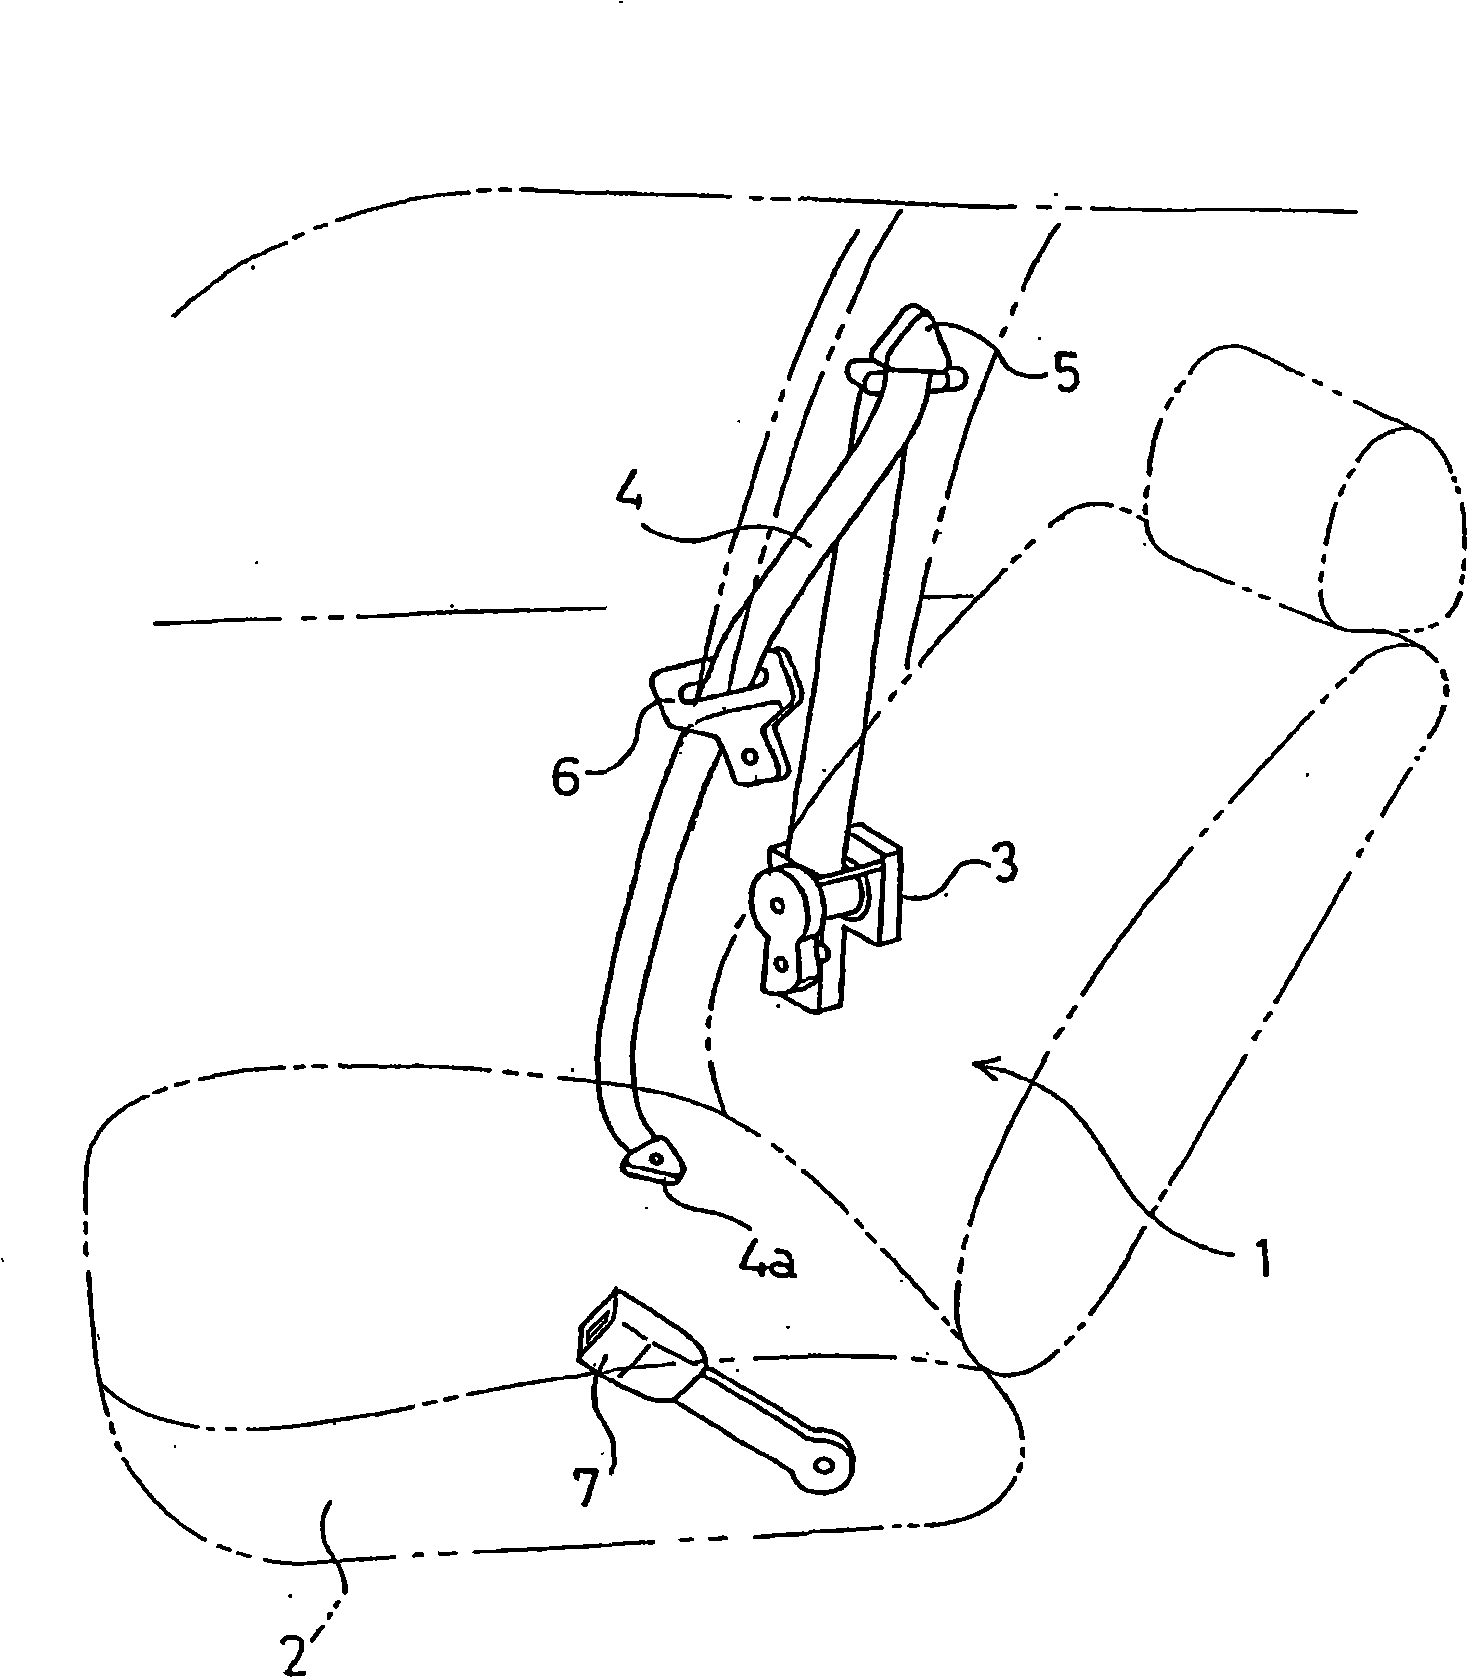 Seat belt retractor and seat belt apparatus having the same